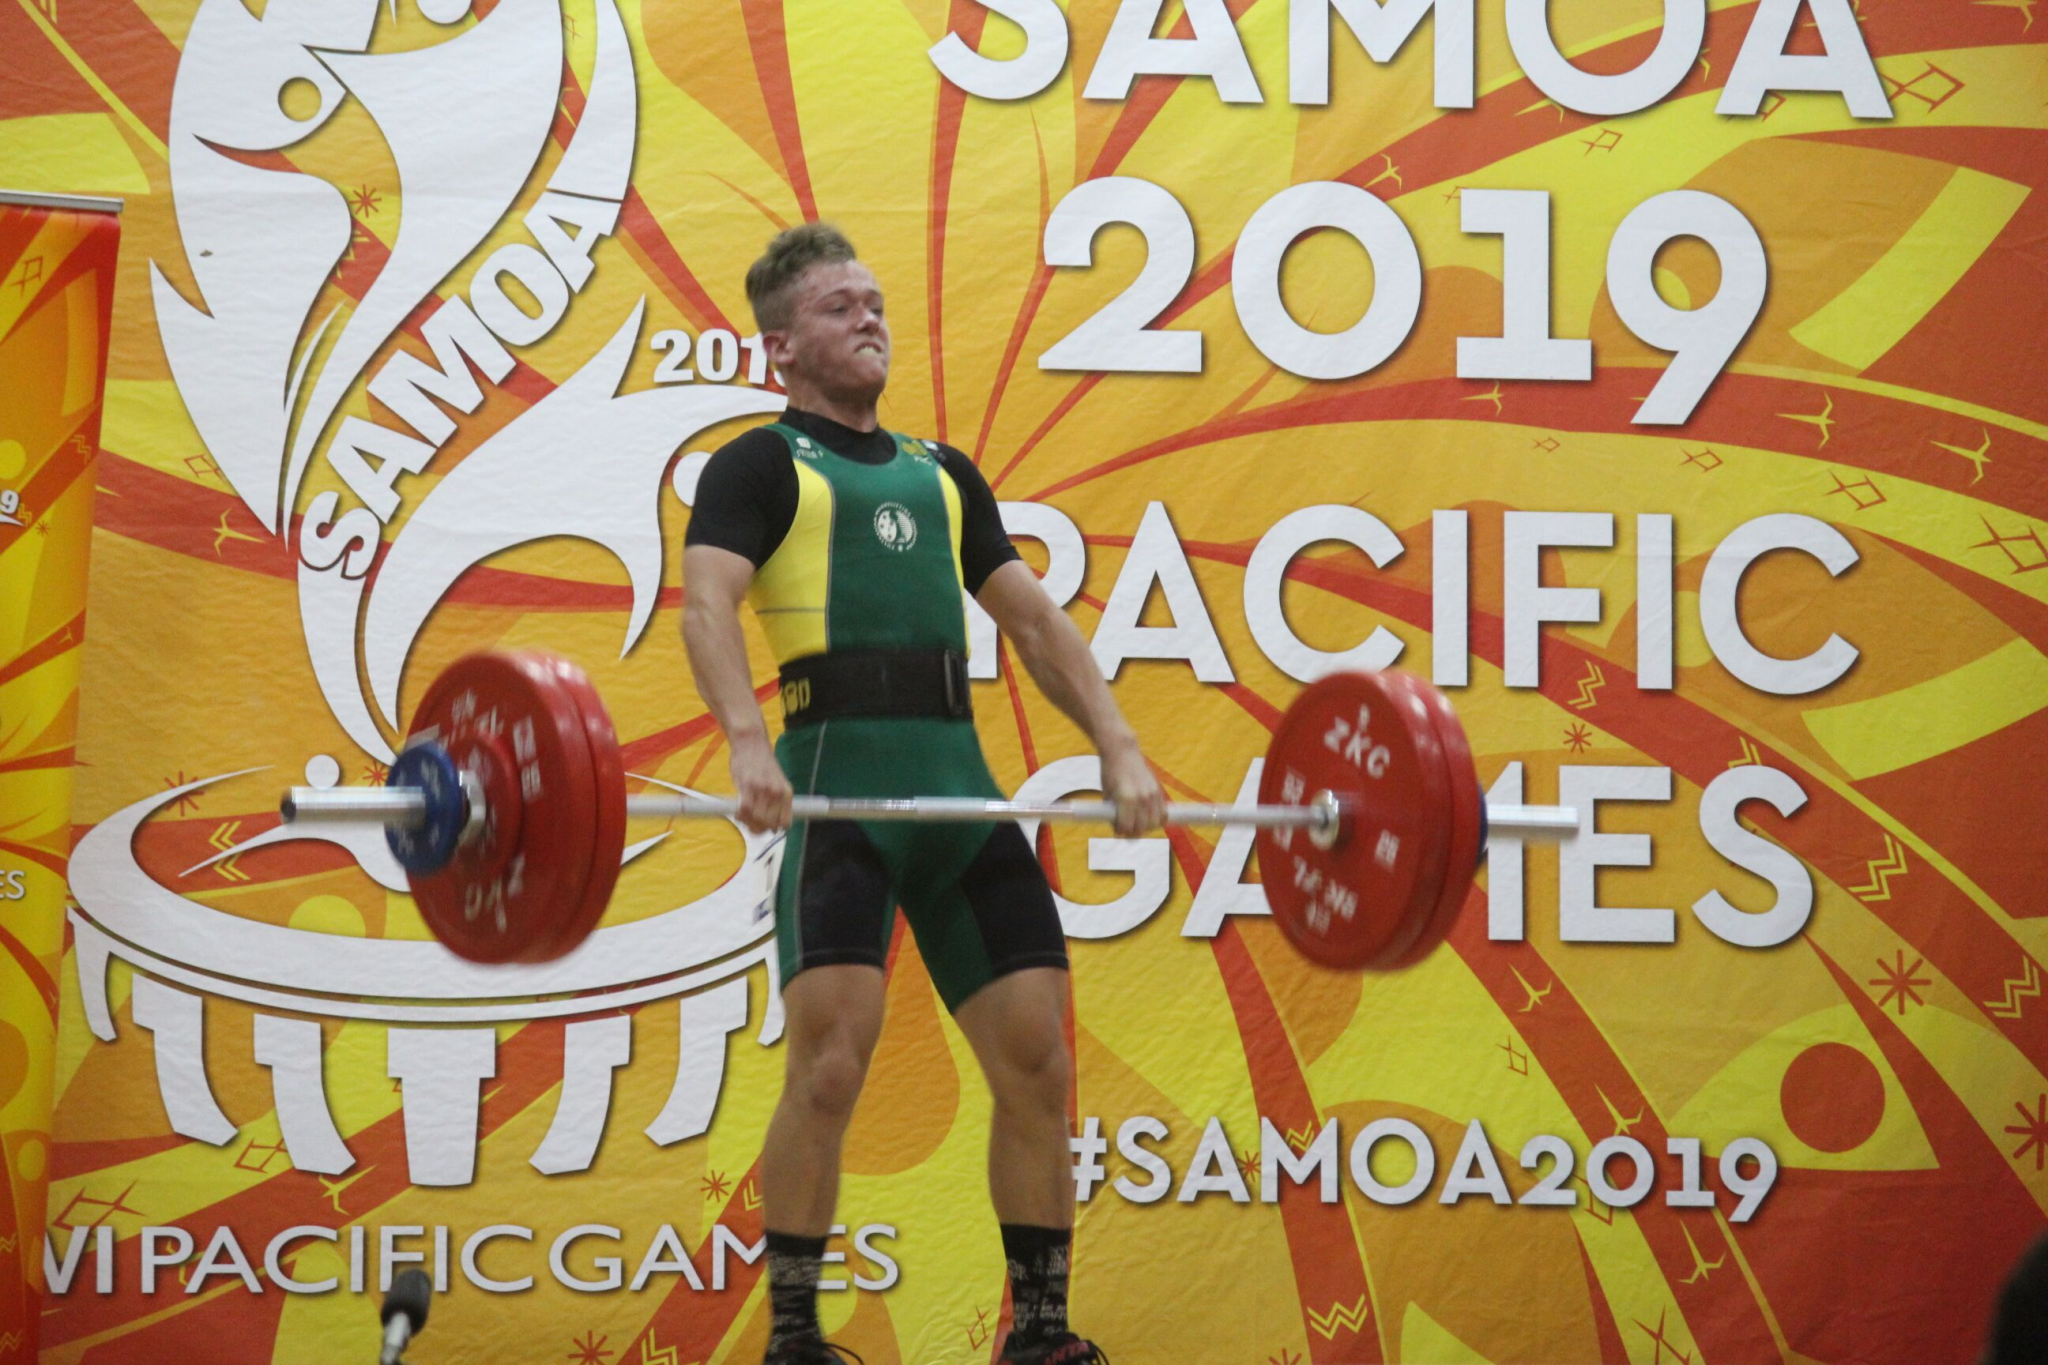 Australia and New Zealand were invited to participate in specific sports at Samoa 2019 ©Samoa 2019